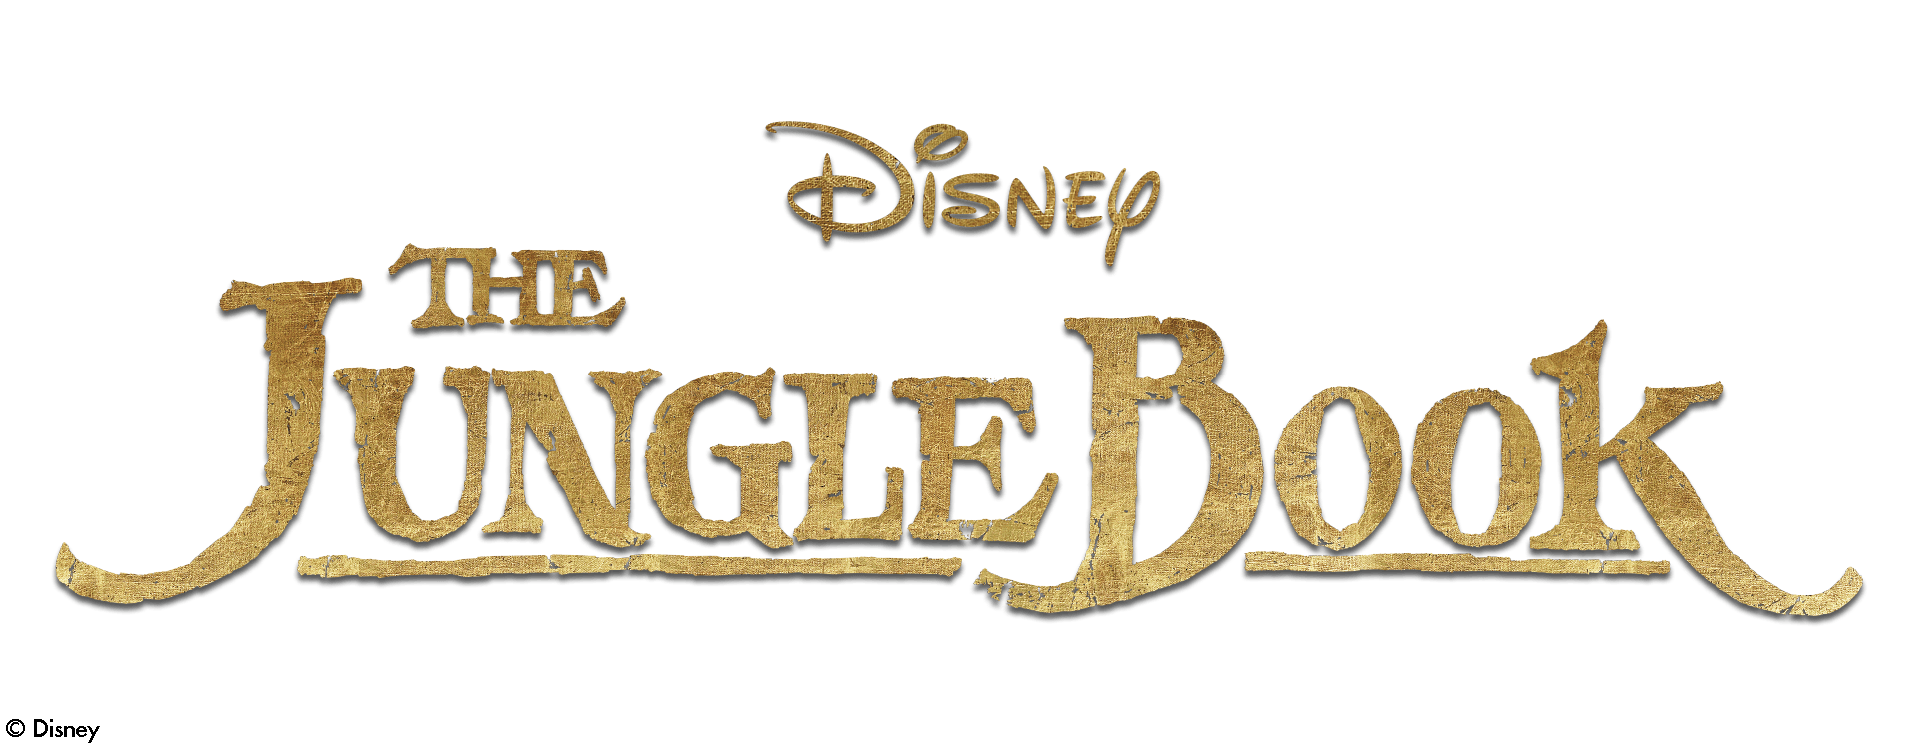 The Jungle Book Logo - Disney Jungle Book by elope